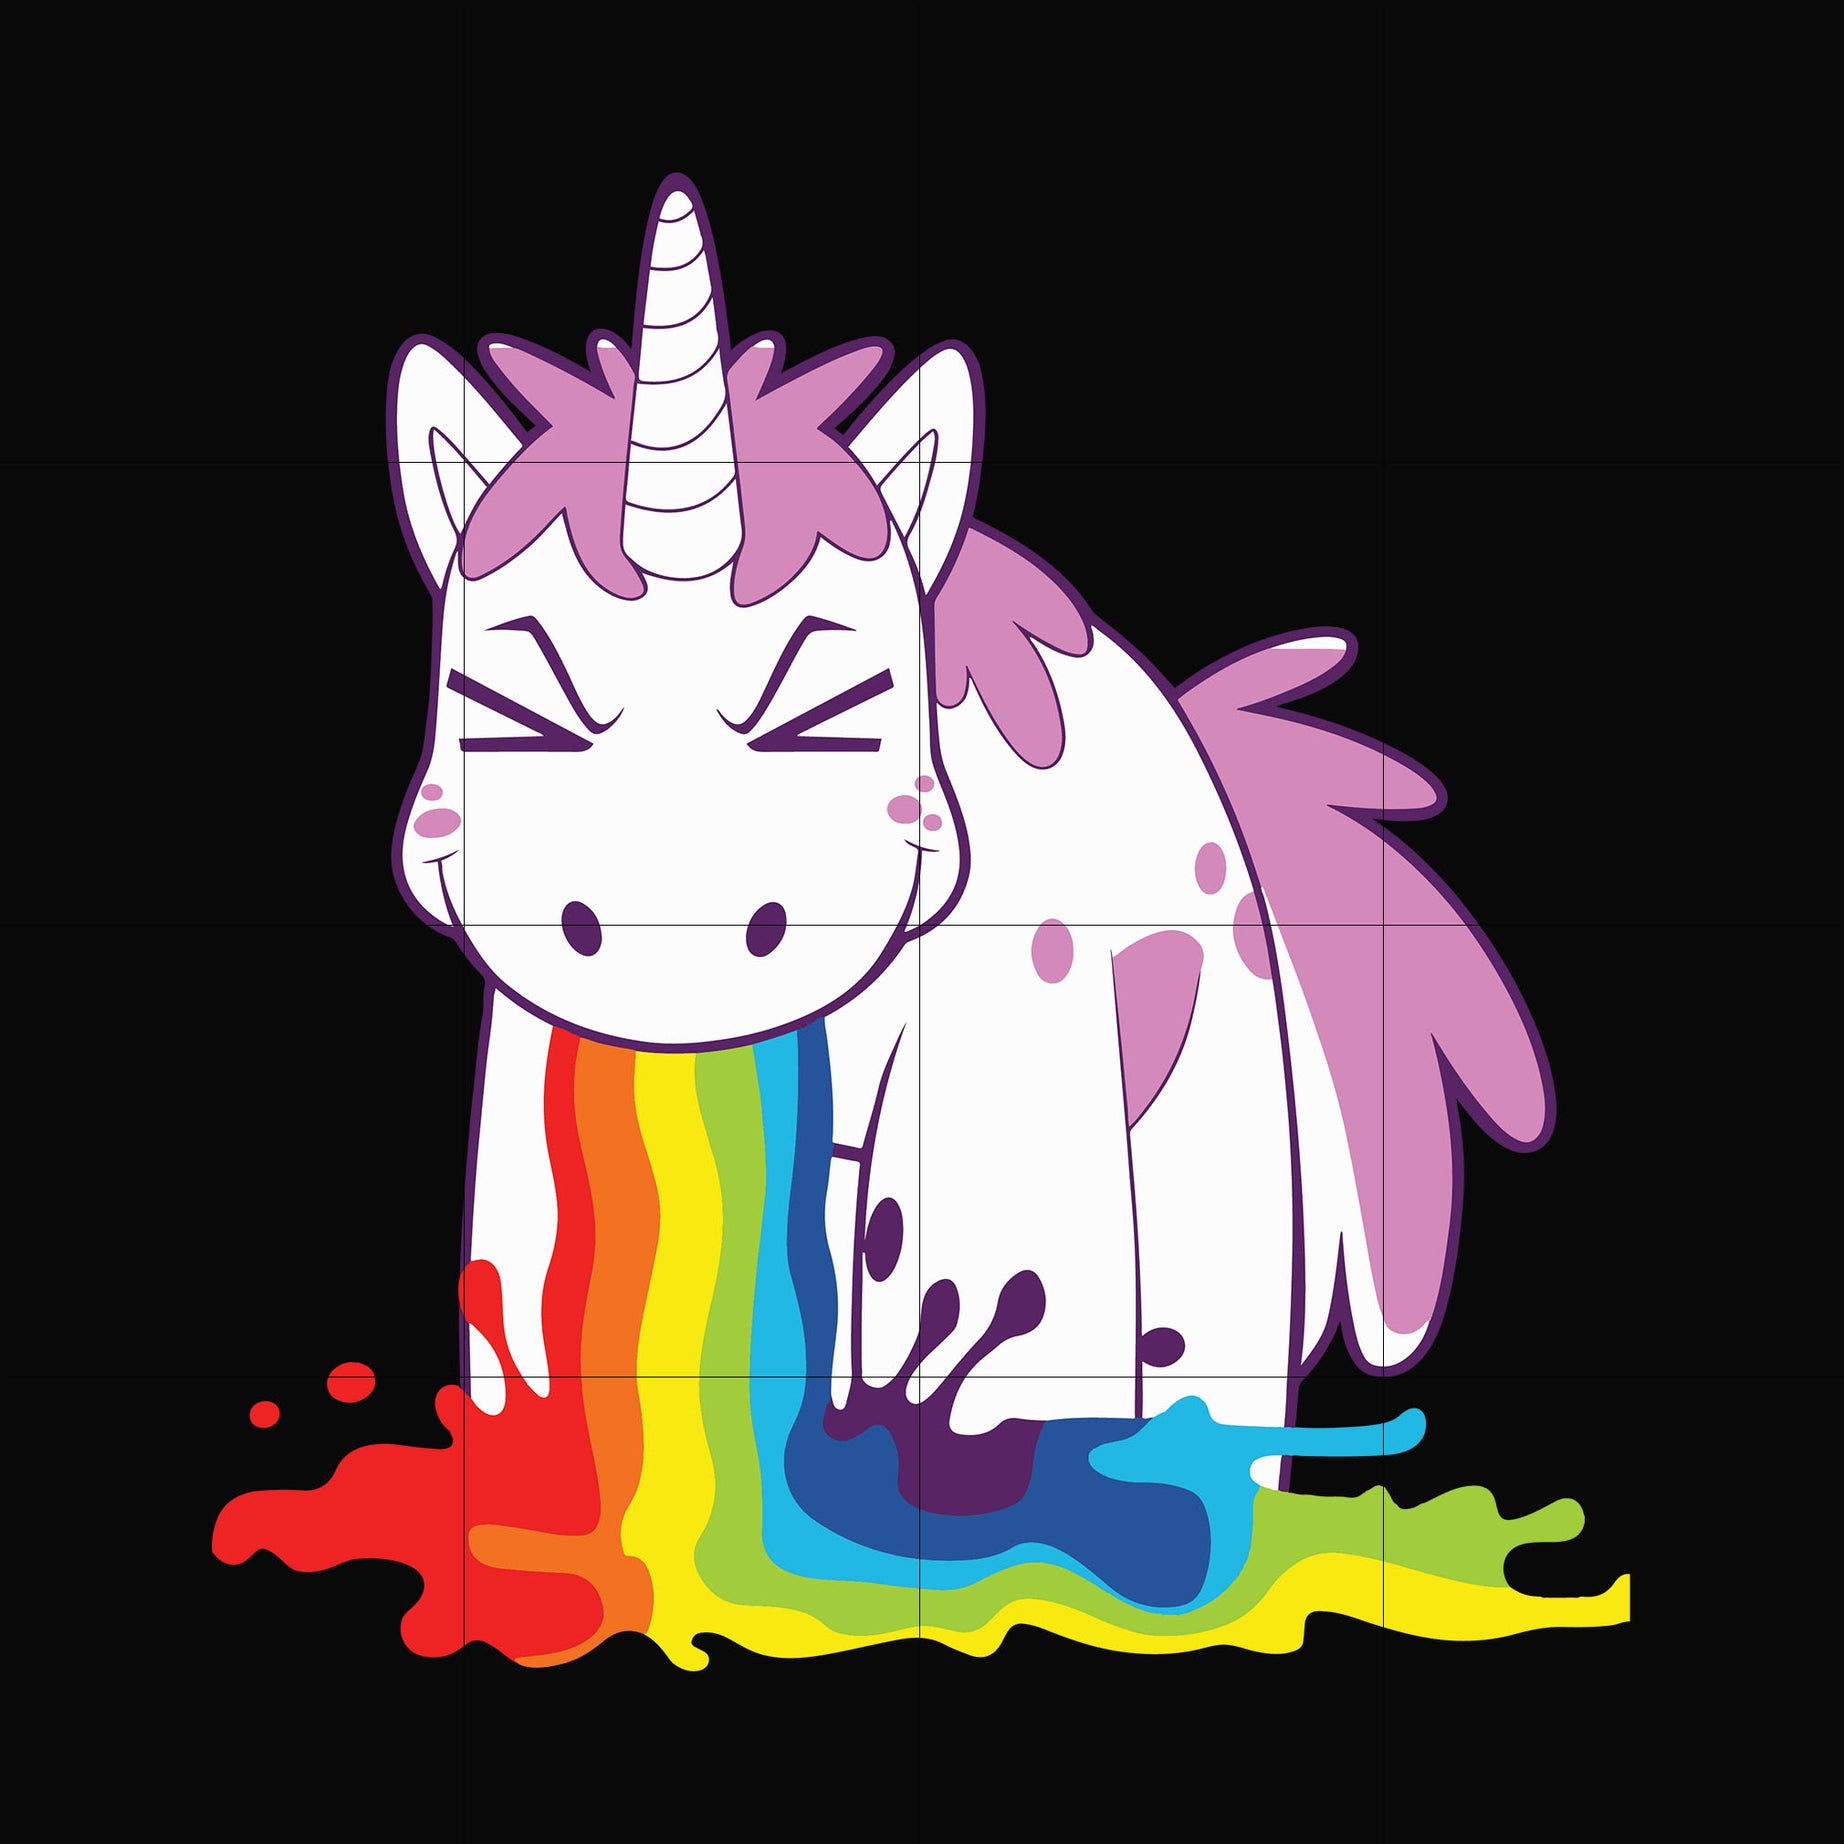 Cute magic unicorn and rainbow svg, png, dxf, eps digital file OTH0013